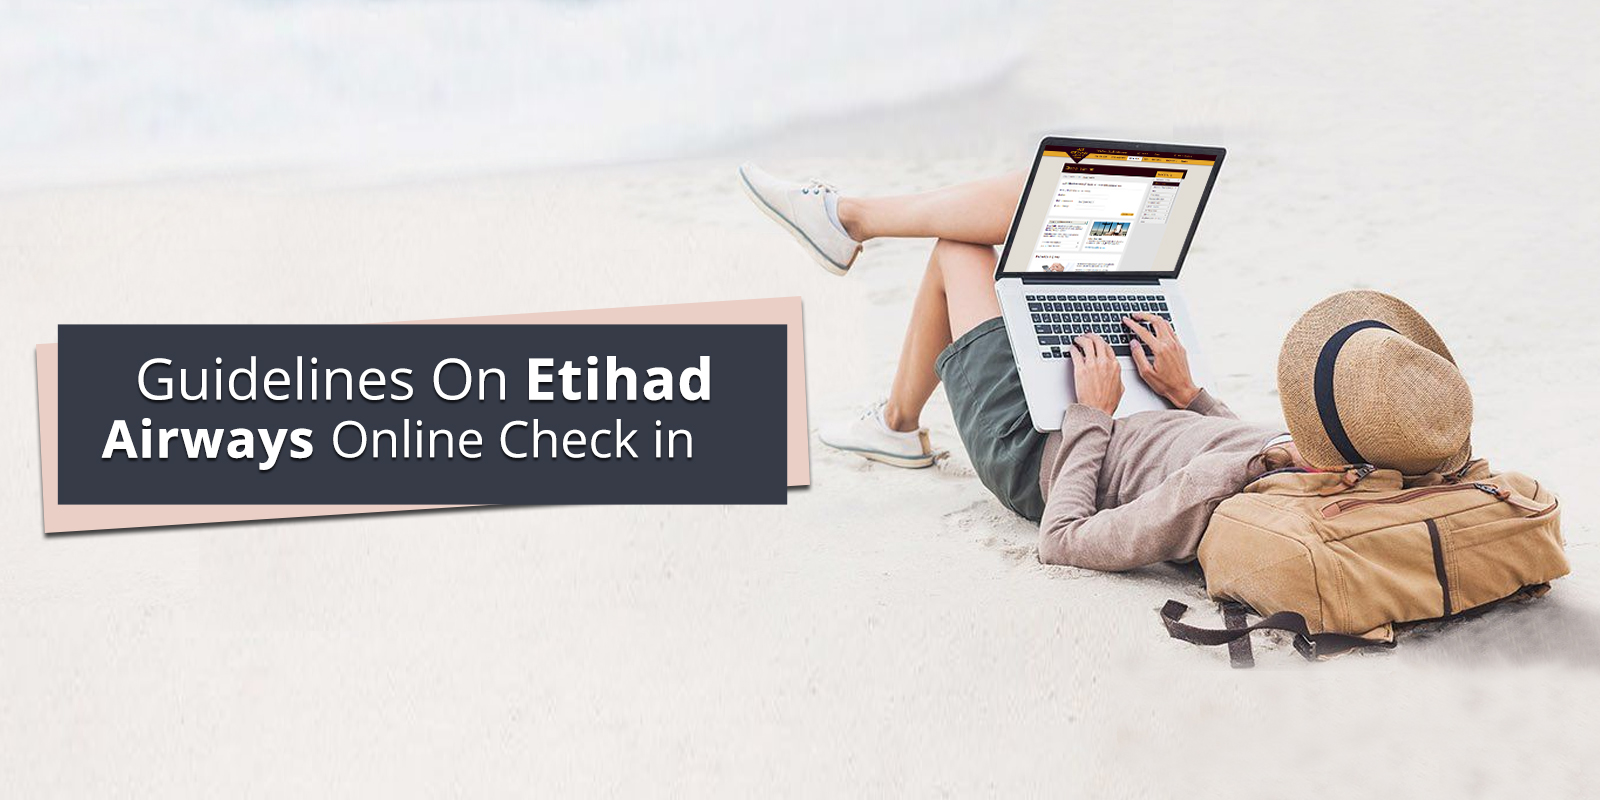 etihad airways latest travel guidelines